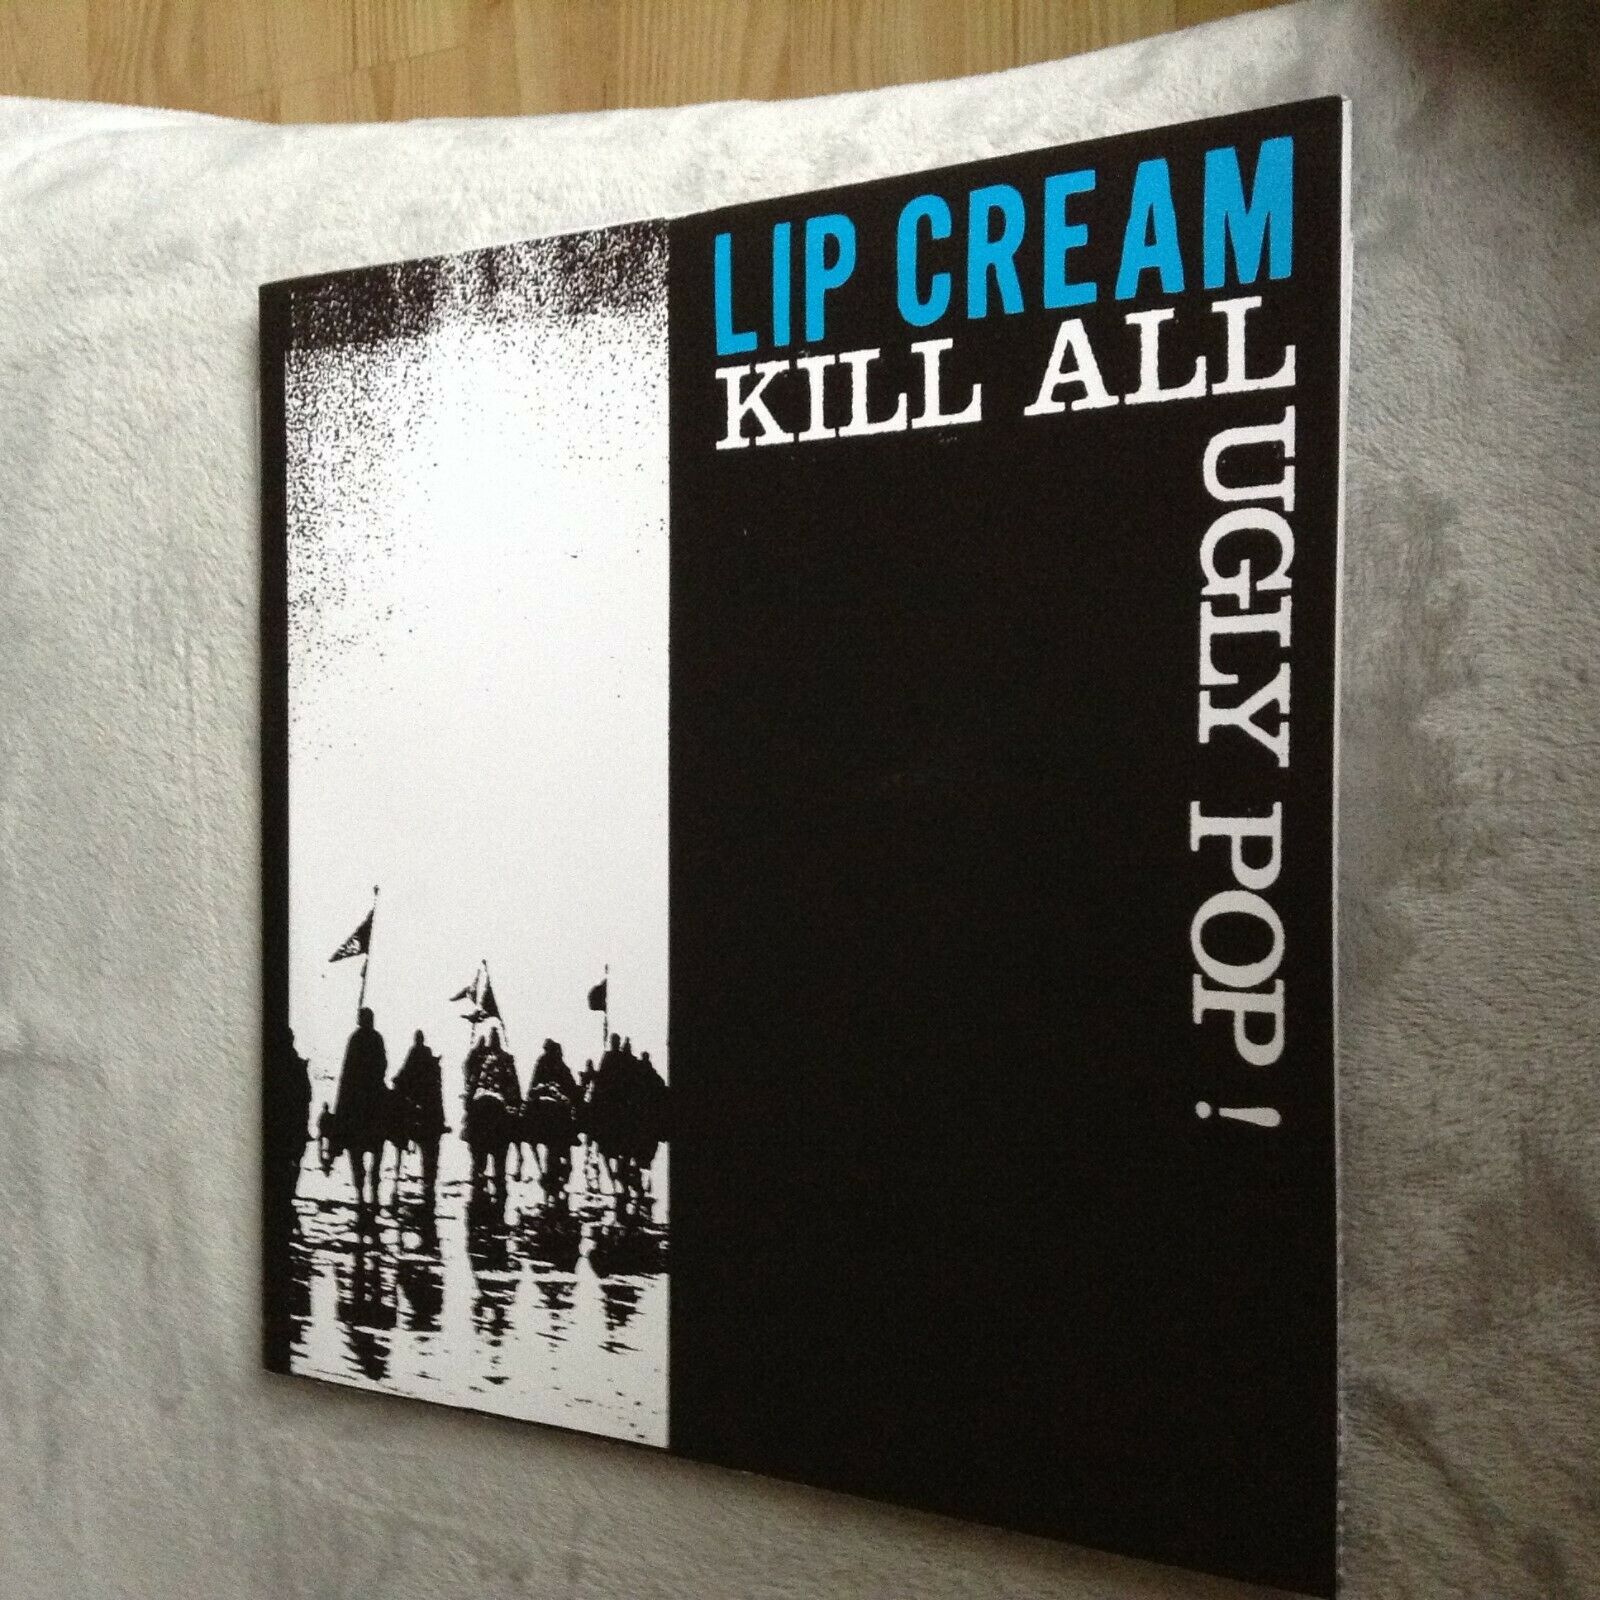 popsike.com - Lip Cream - Kill All Ugly Pop (2 x LP) re-issue Punk